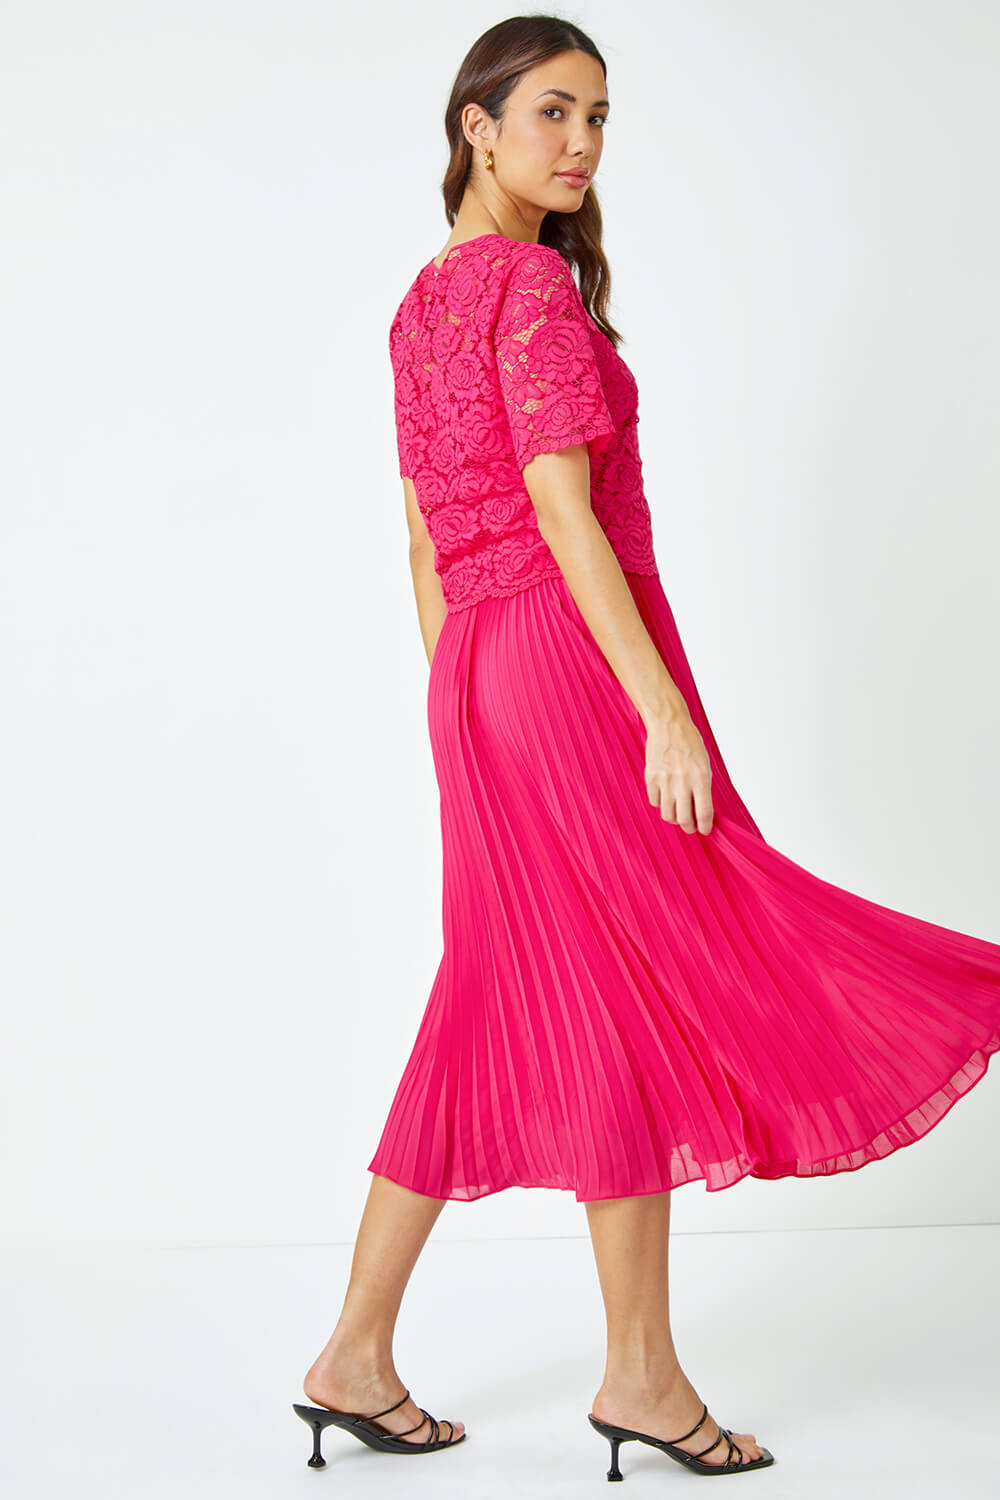 CERISE Lace Top Overlay Pleated Midi Dress, Image 3 of 5